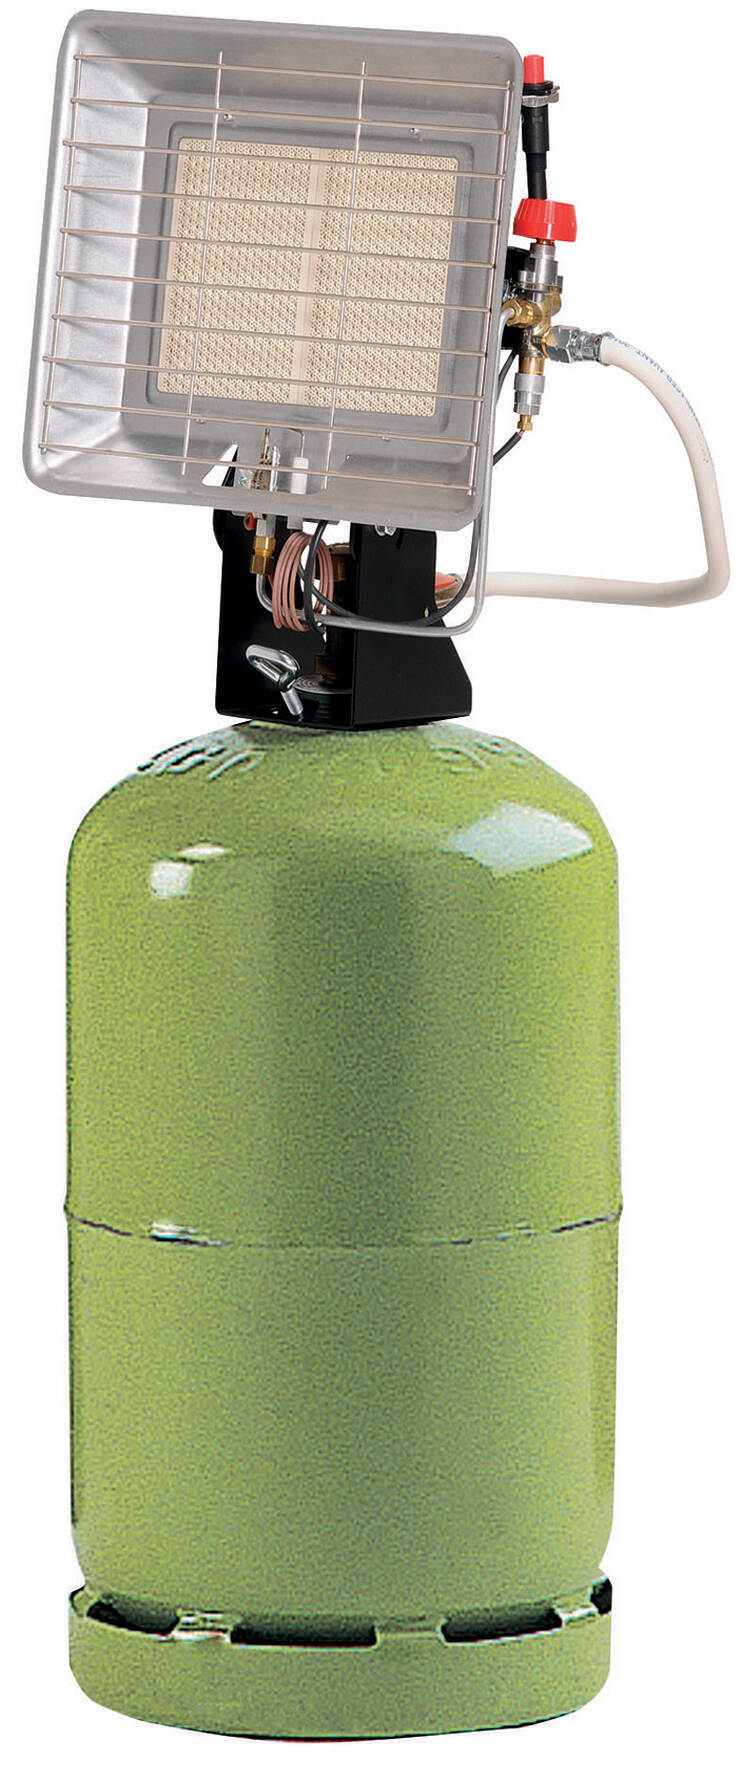 Chauffage radiant infrarouge mobile pour bouteille de gaz butane ou propane  - Tom Press